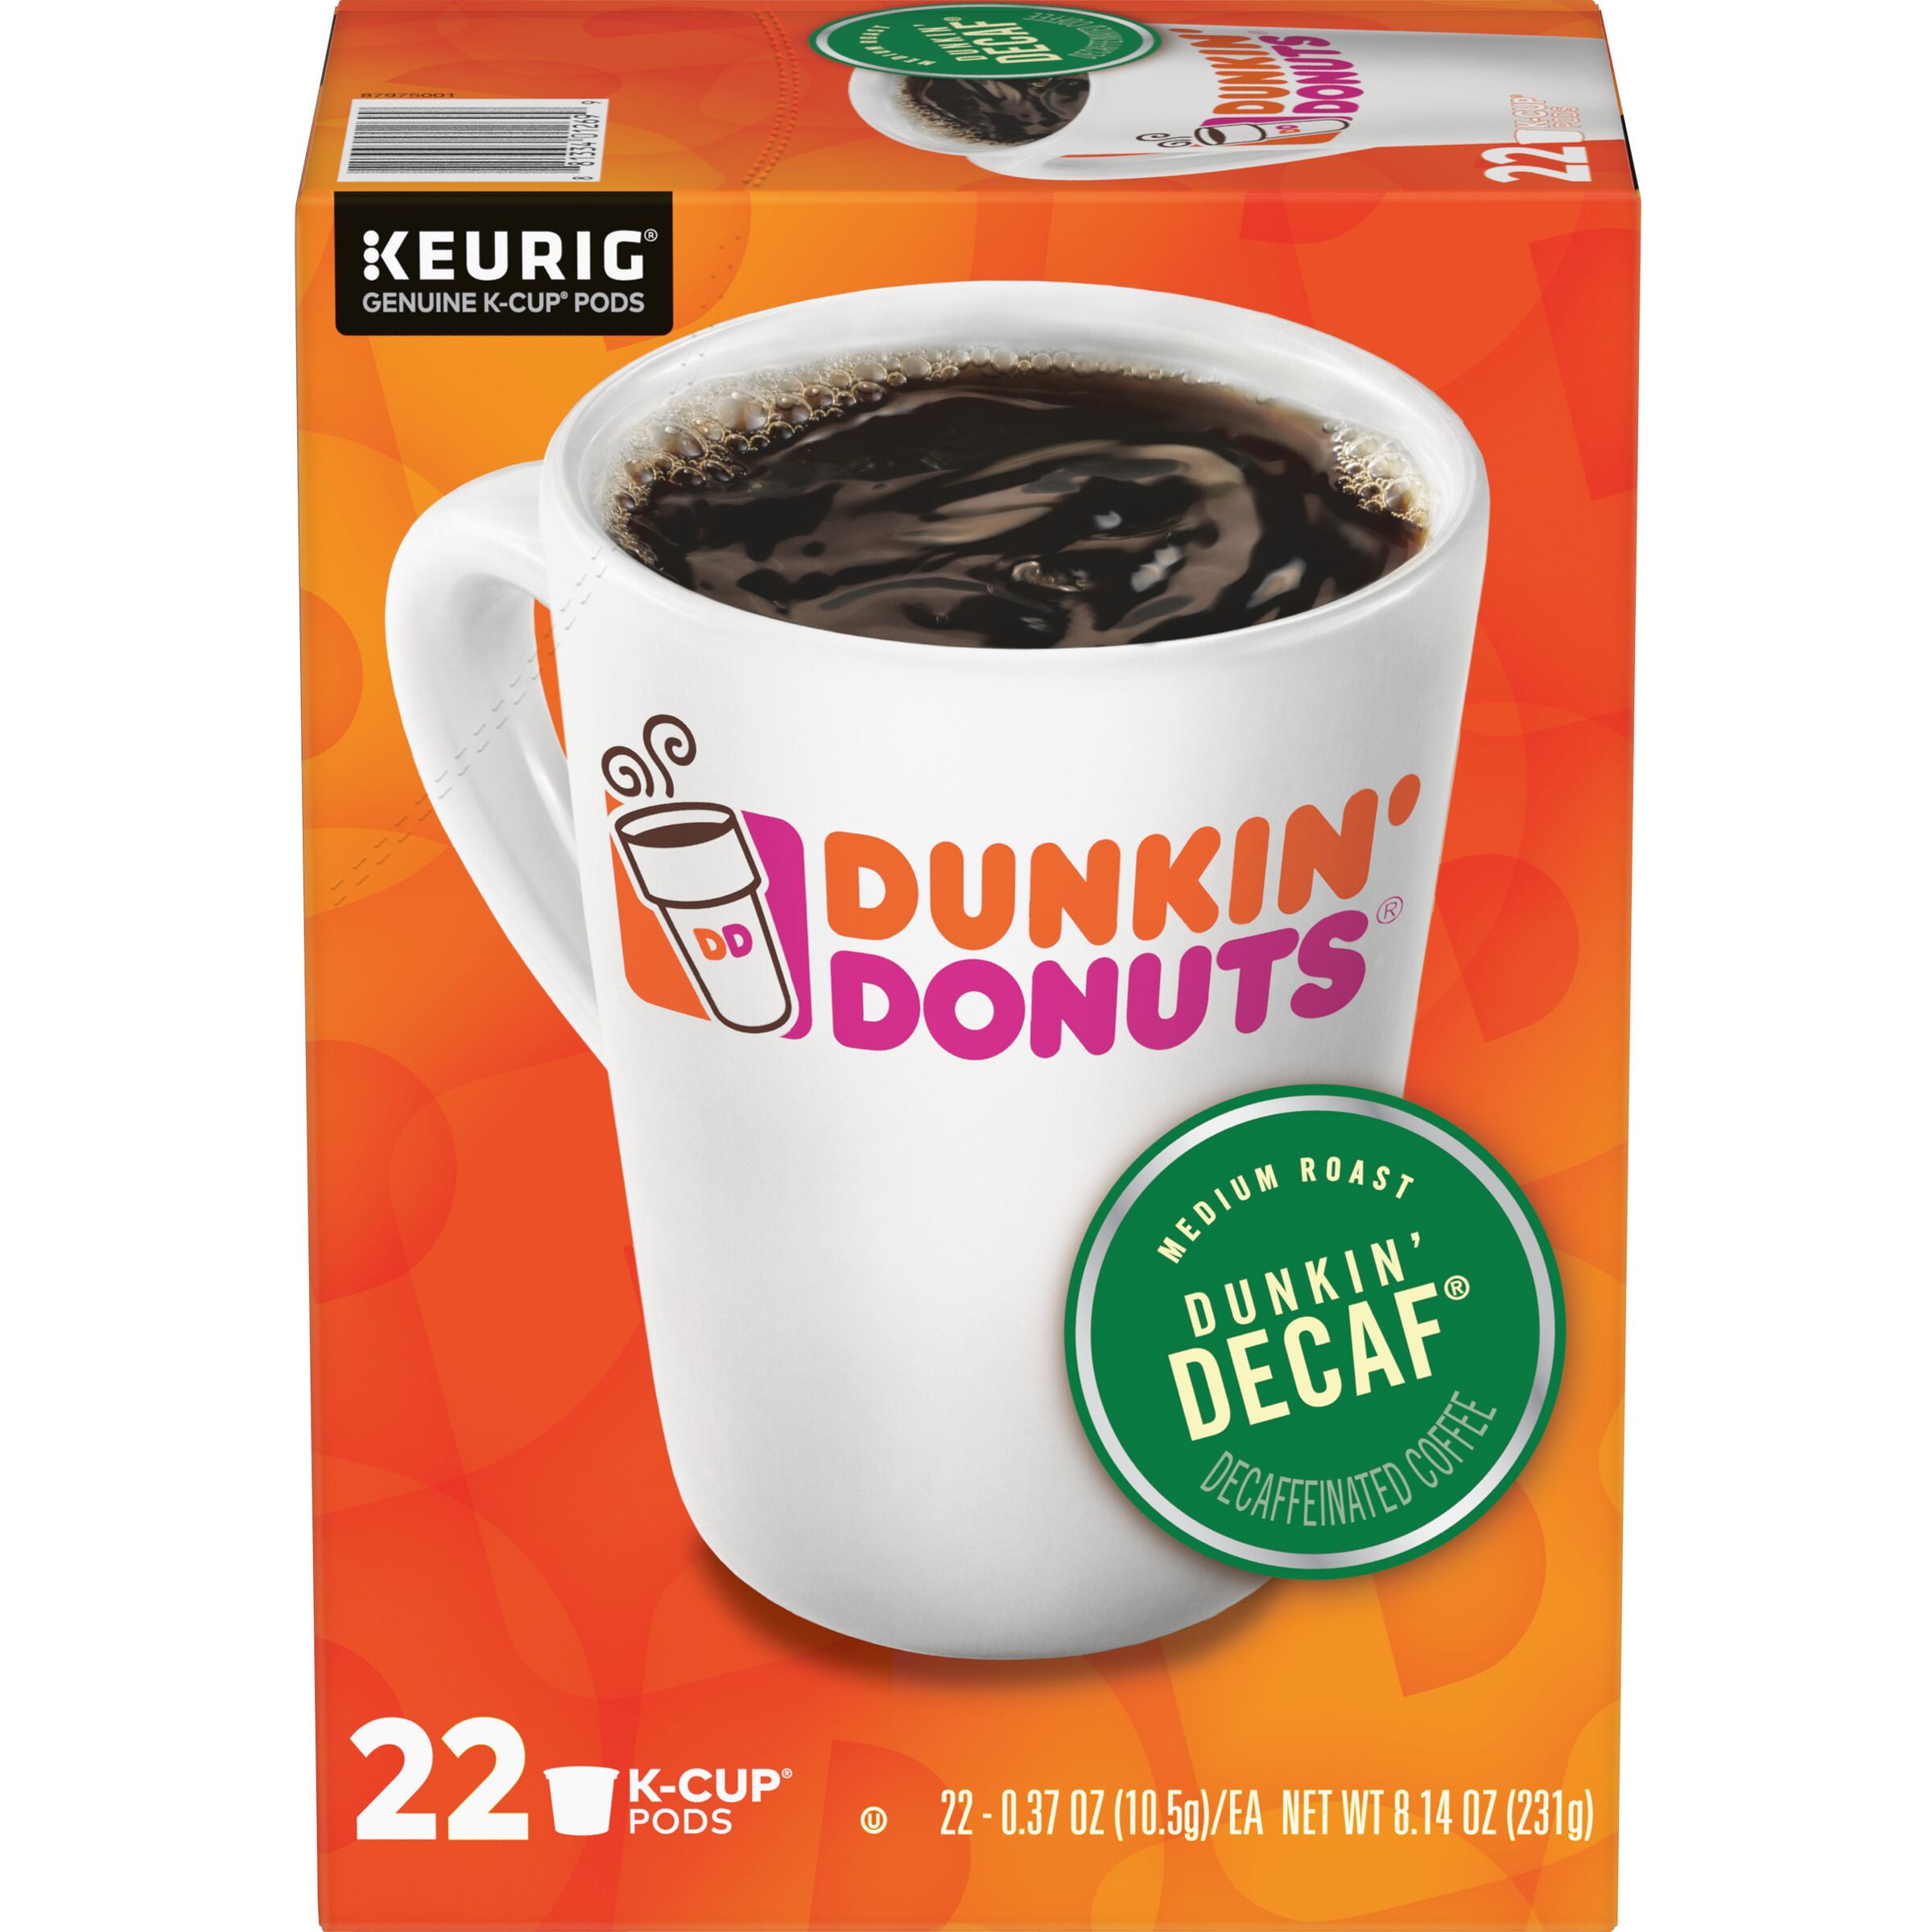 Dunkin Decaf Medium Roast Coffee, 22 K-Cup Pods for Keurig Coffee Makers